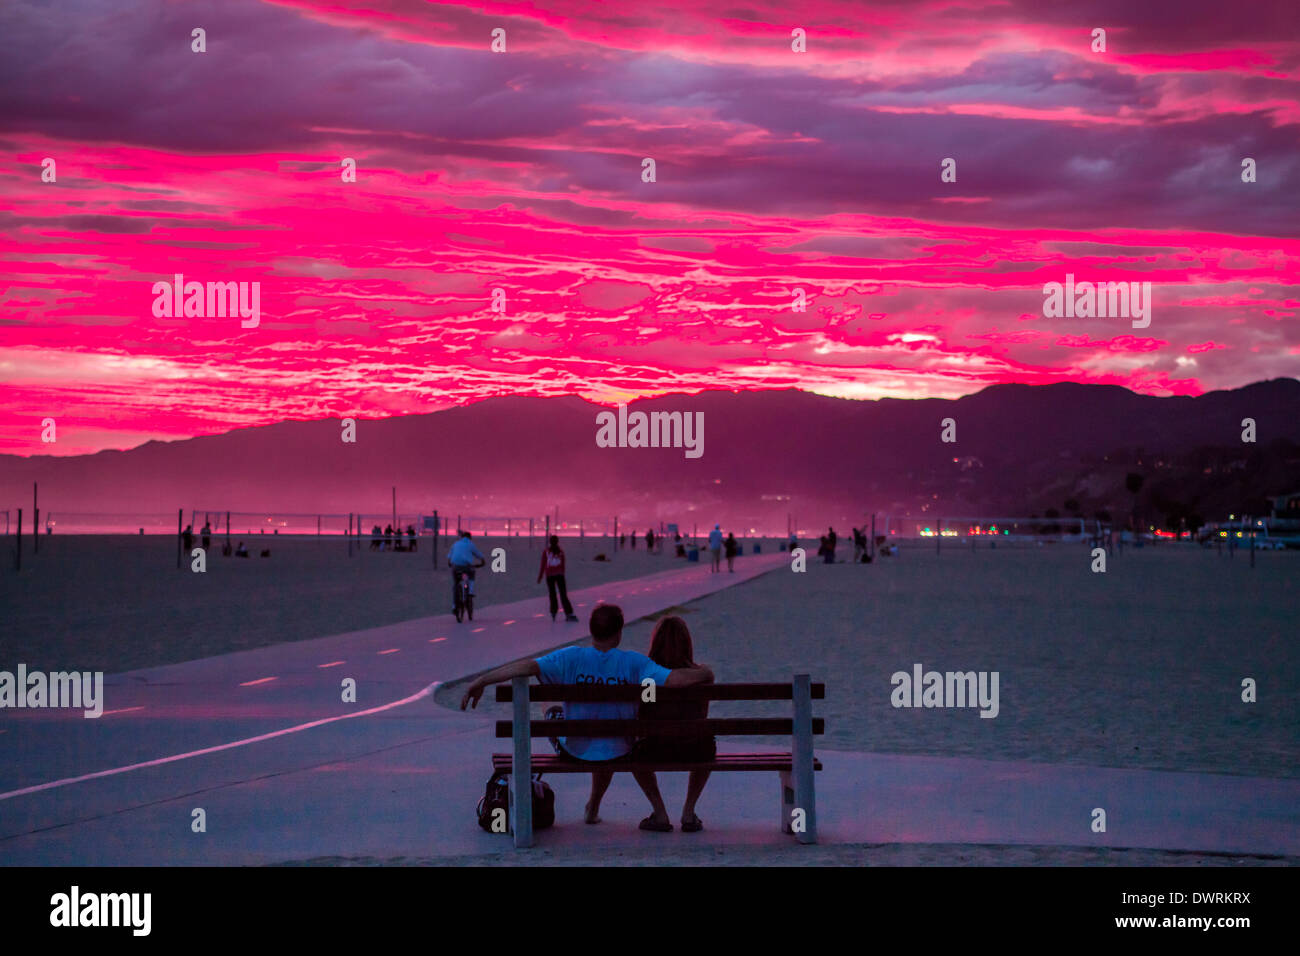 a-spectacular-red-sunset-at-the-beach-in-santa-monica-california-courtesy-DWRKRX.jpg